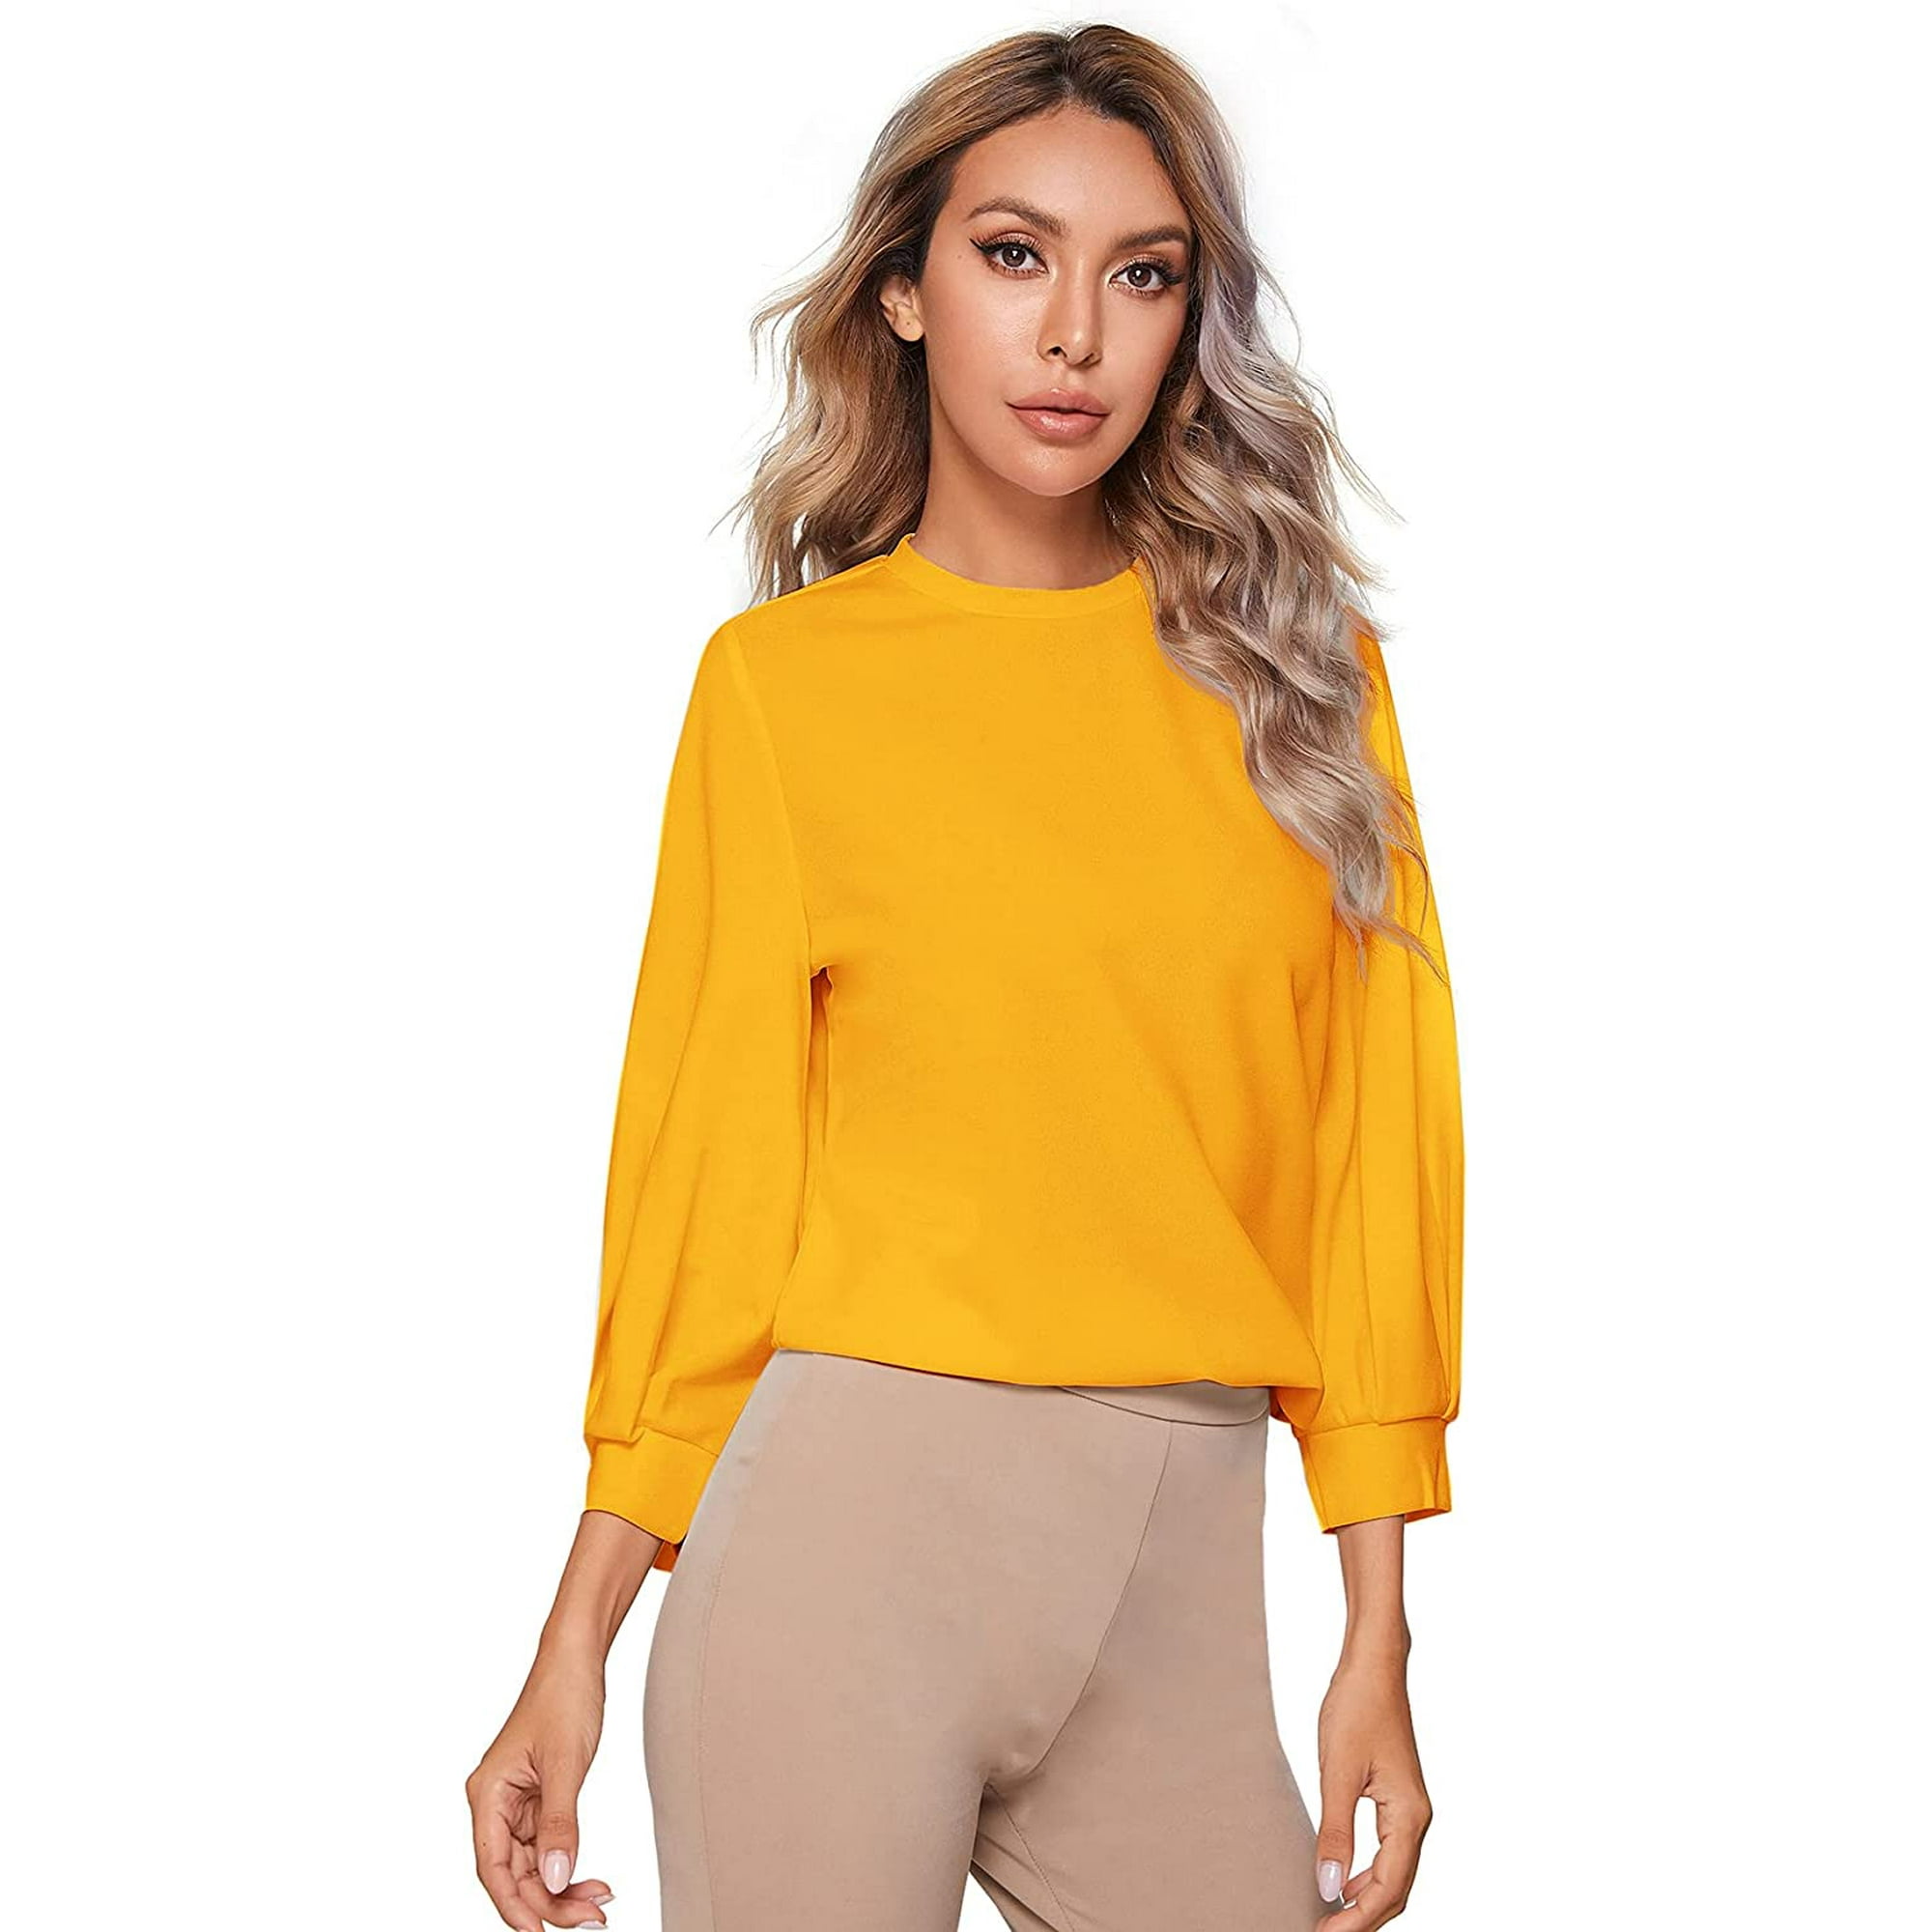 Camisa lisa de manga larga para mujer amarillo Bolf HH039